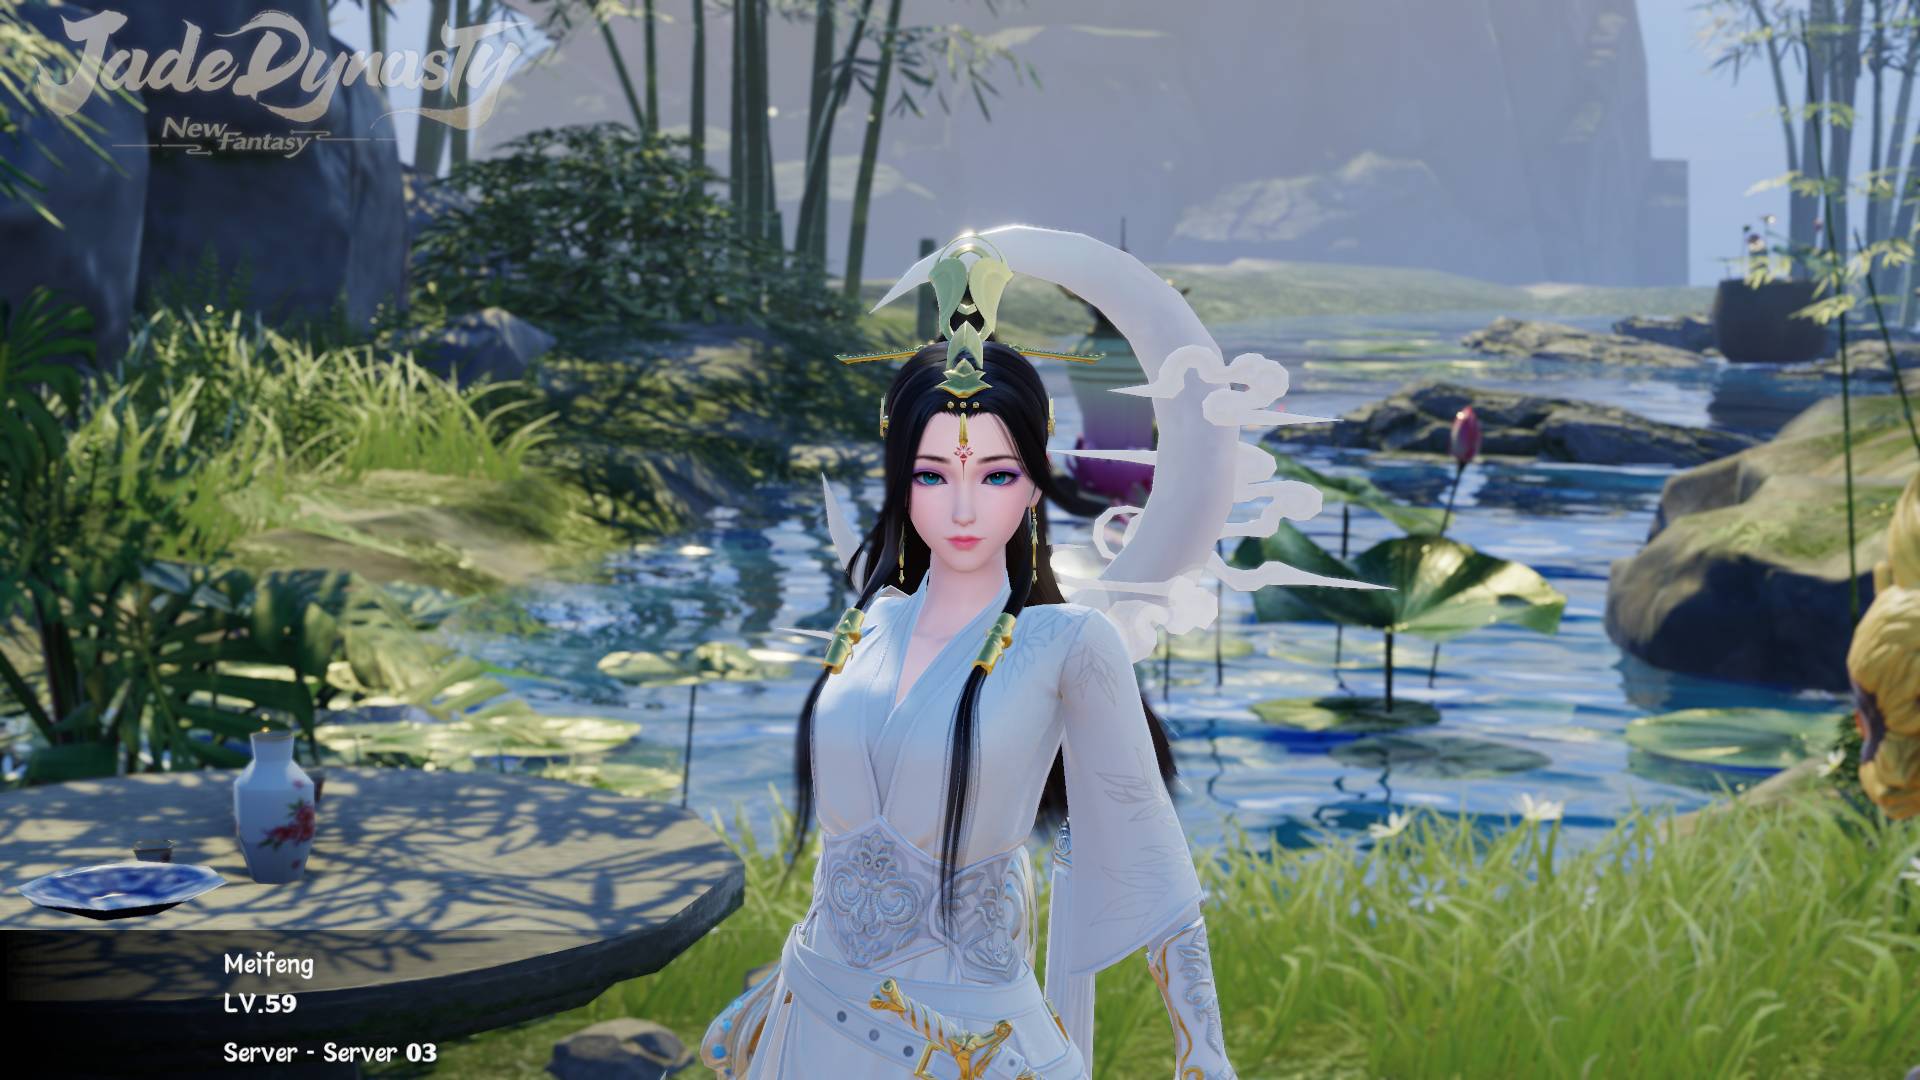 [Strategi] Tips Mid Sampai End Game Jade Dynasty: New Fantasy